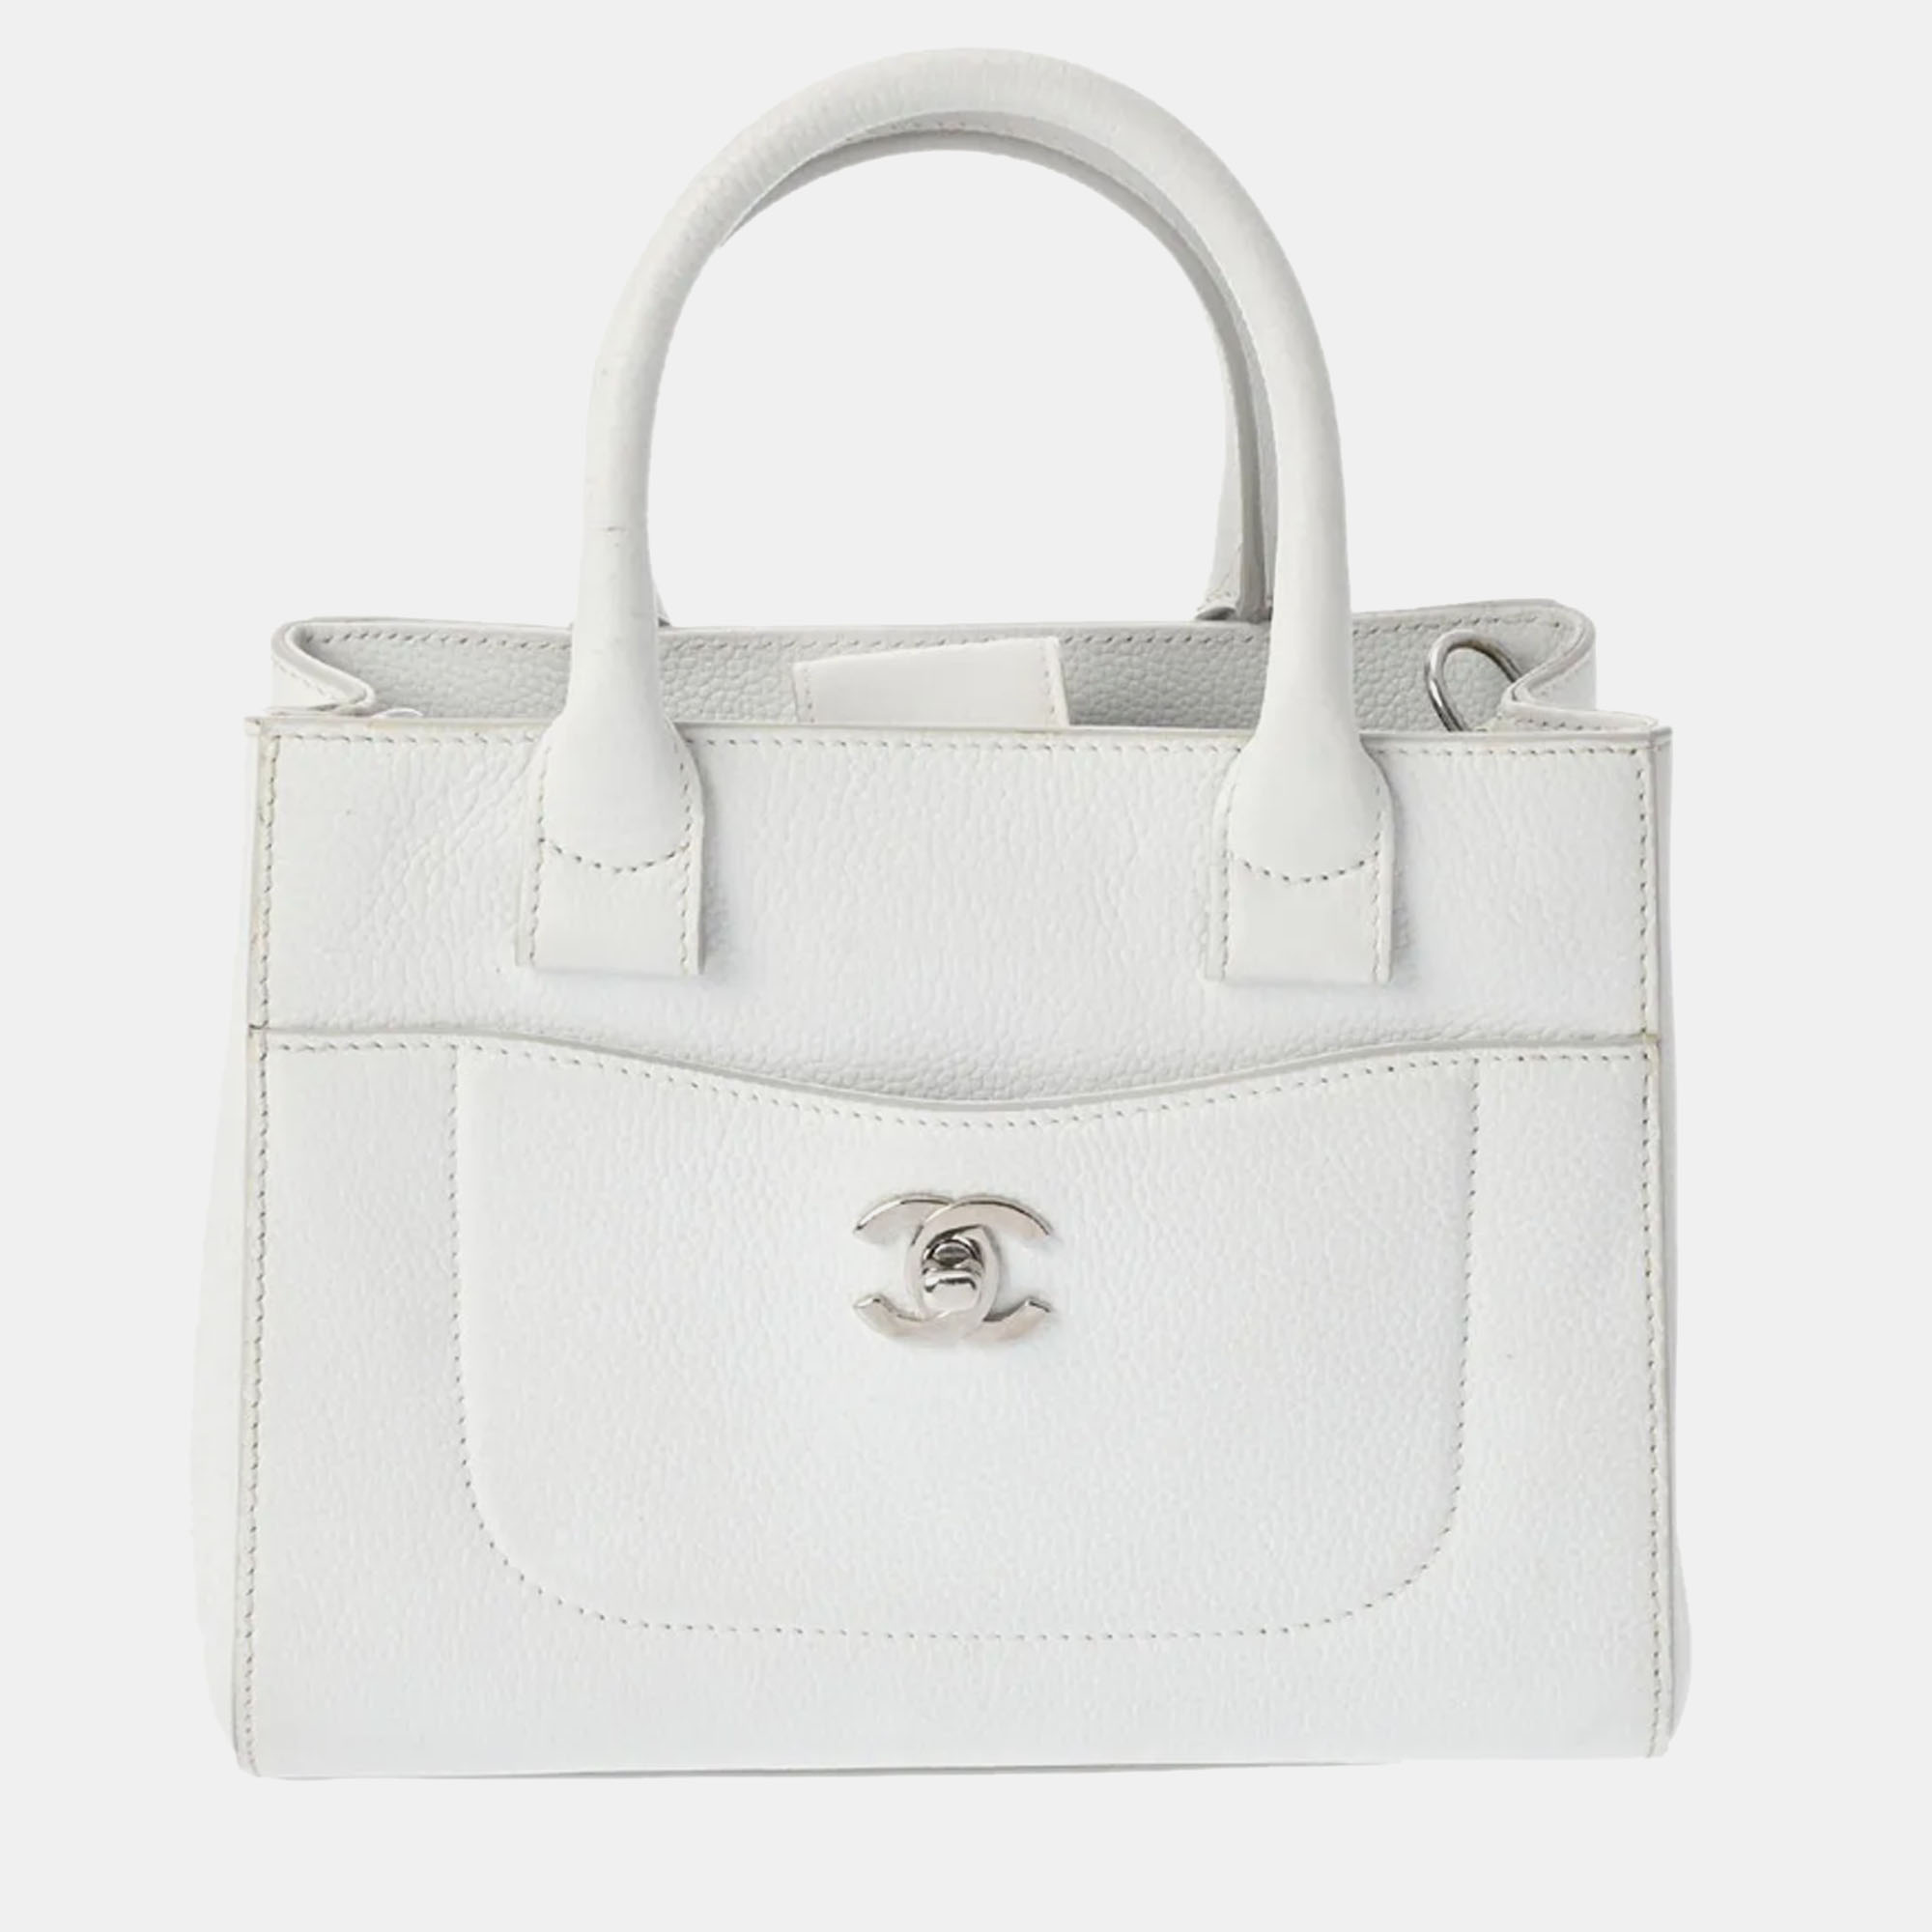 Chanel white leather mini neo executive tote